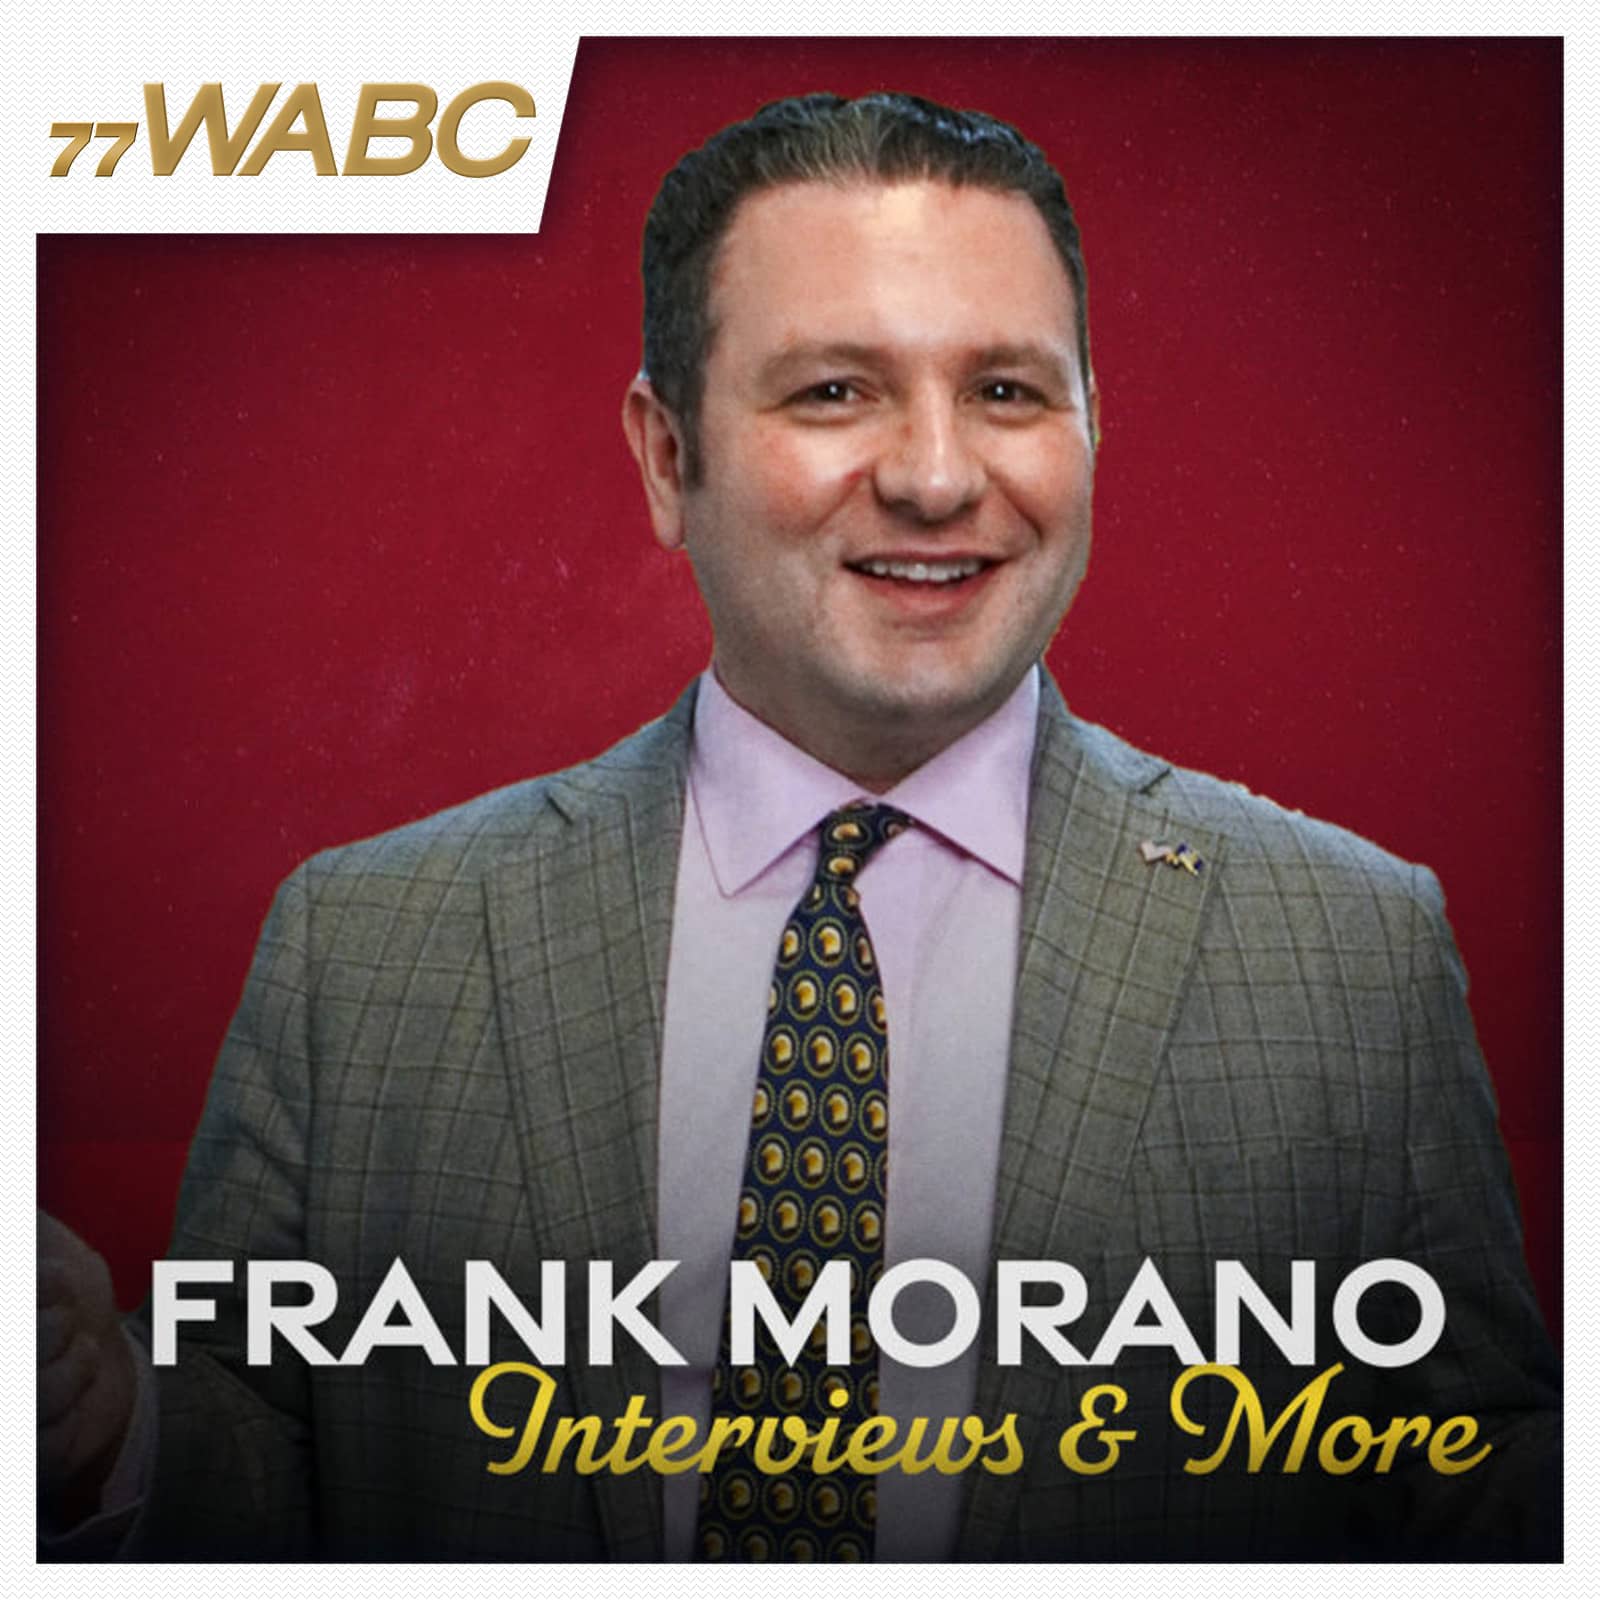 frank-morano-interviews-and-more-podcast-new-logo-320